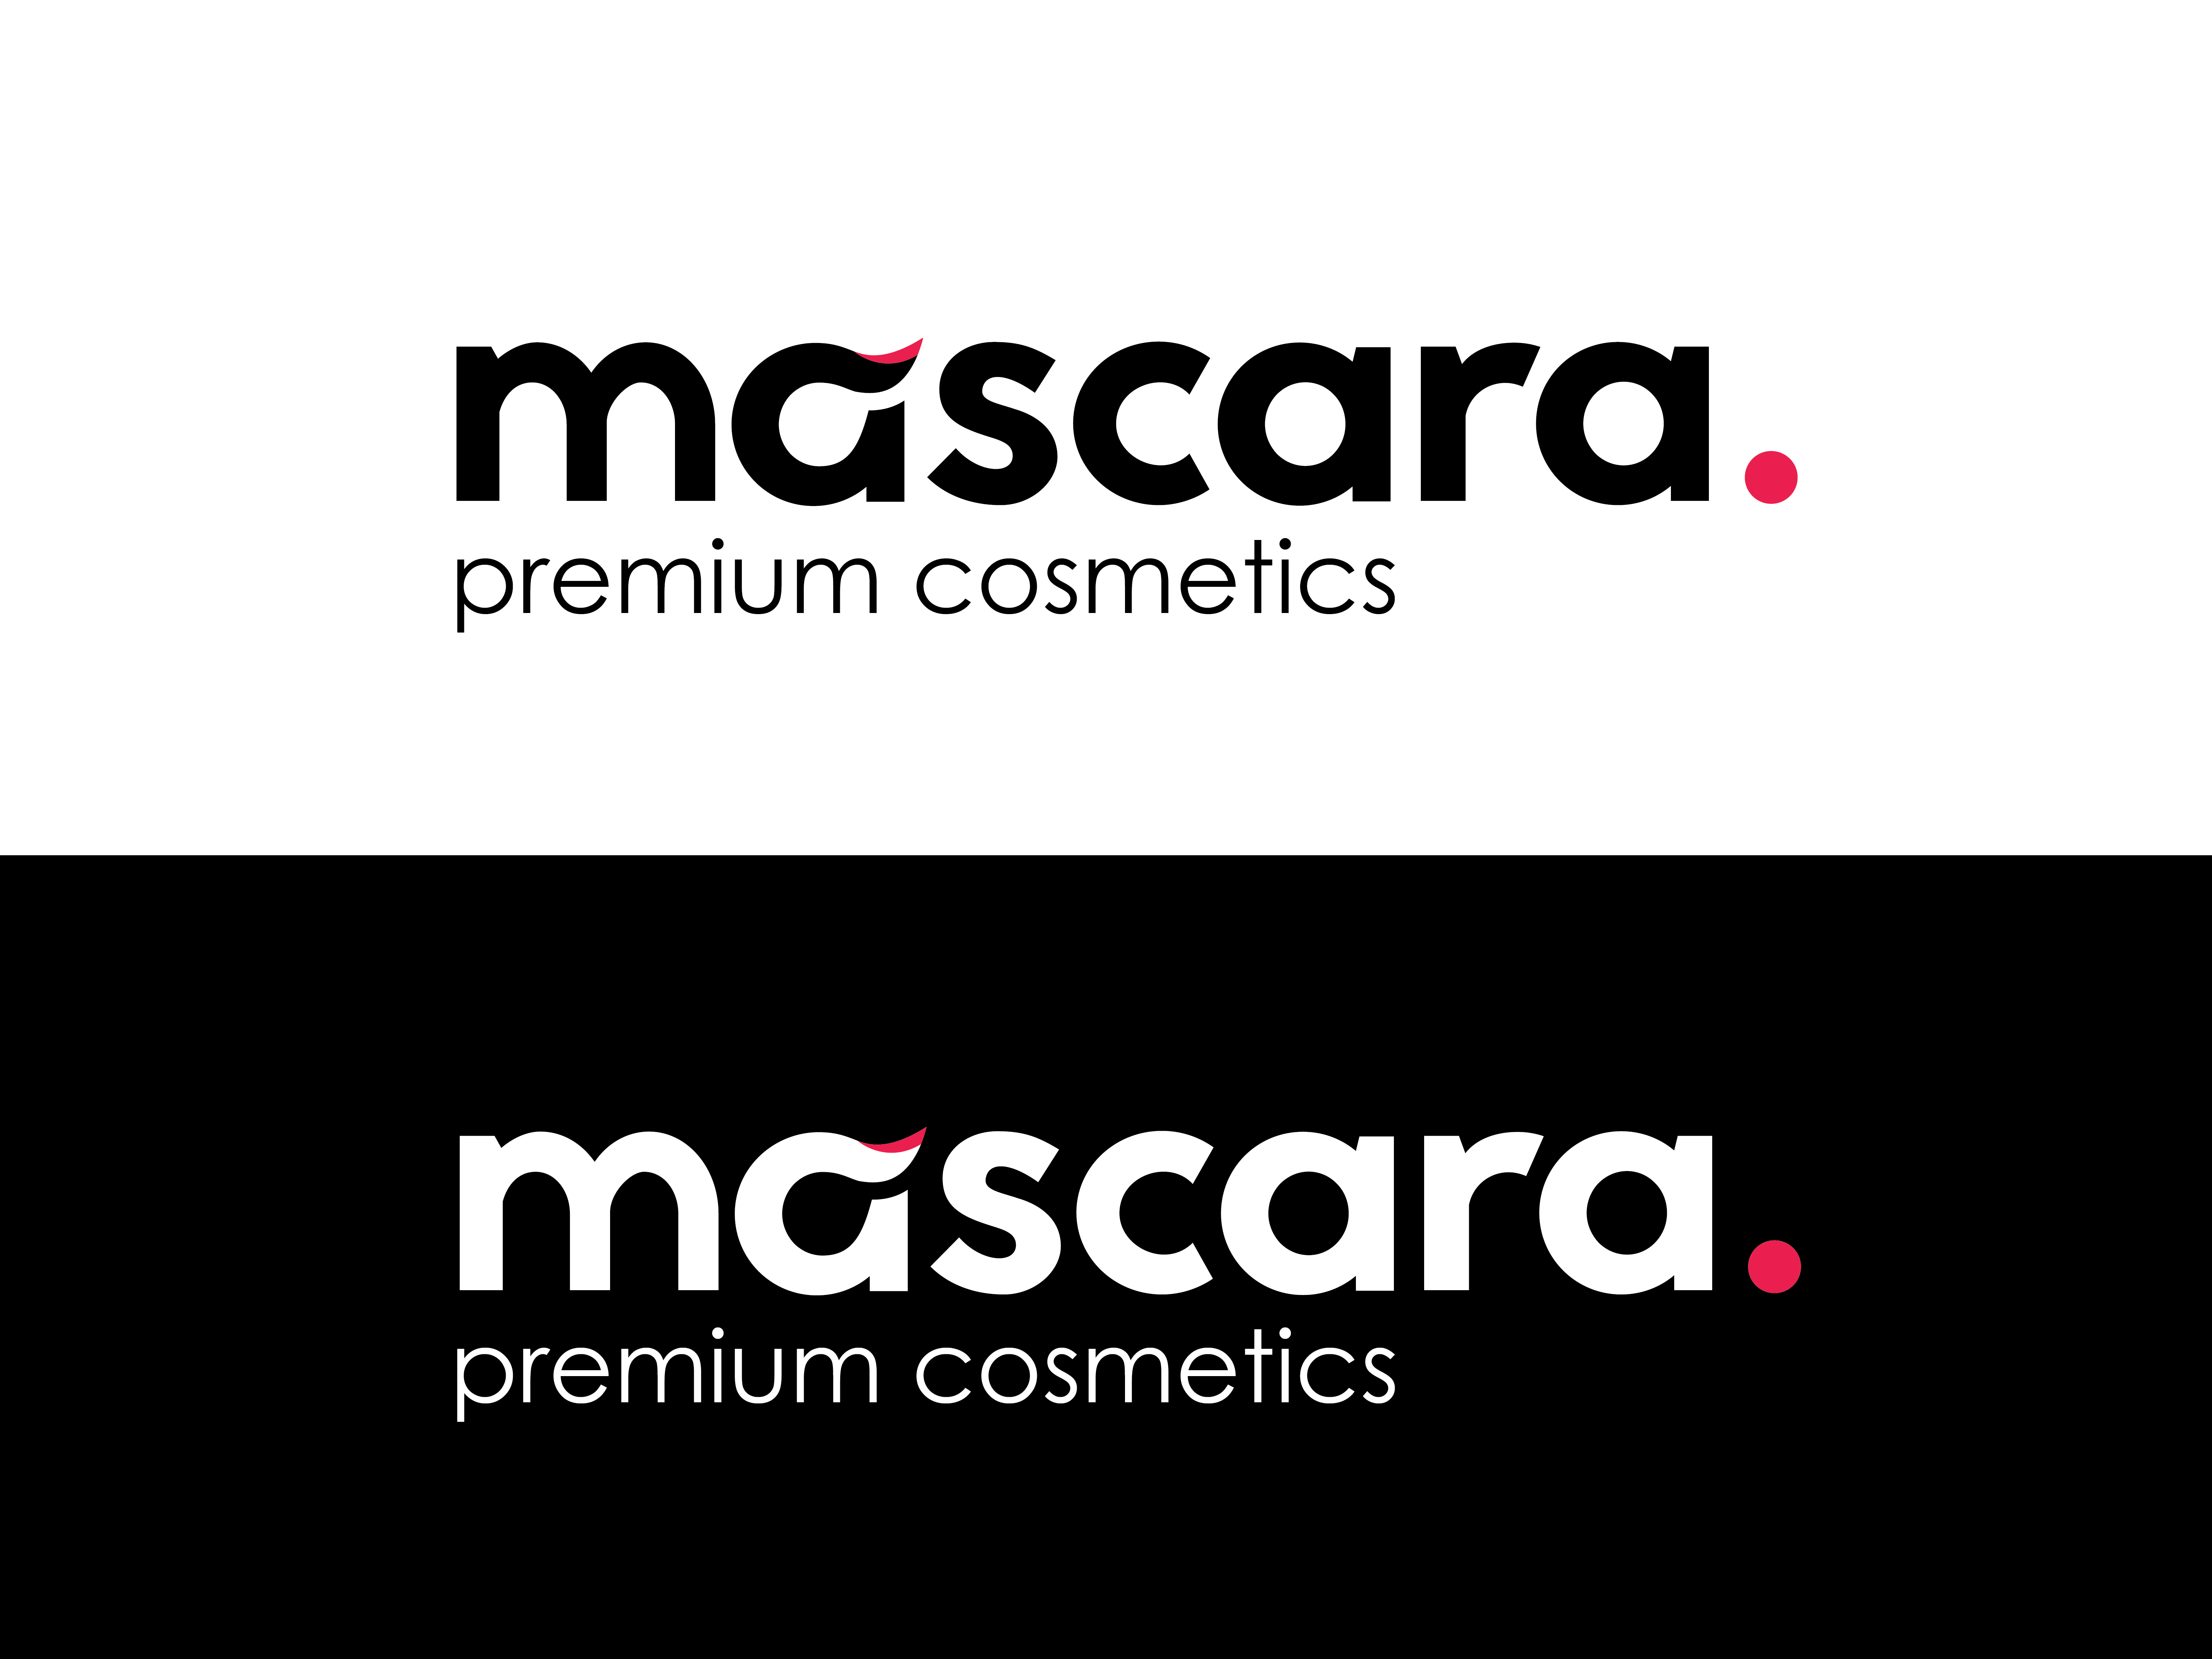 Mascara Logo - Mascara Logo by Anna Shaposhnik on Dribbble